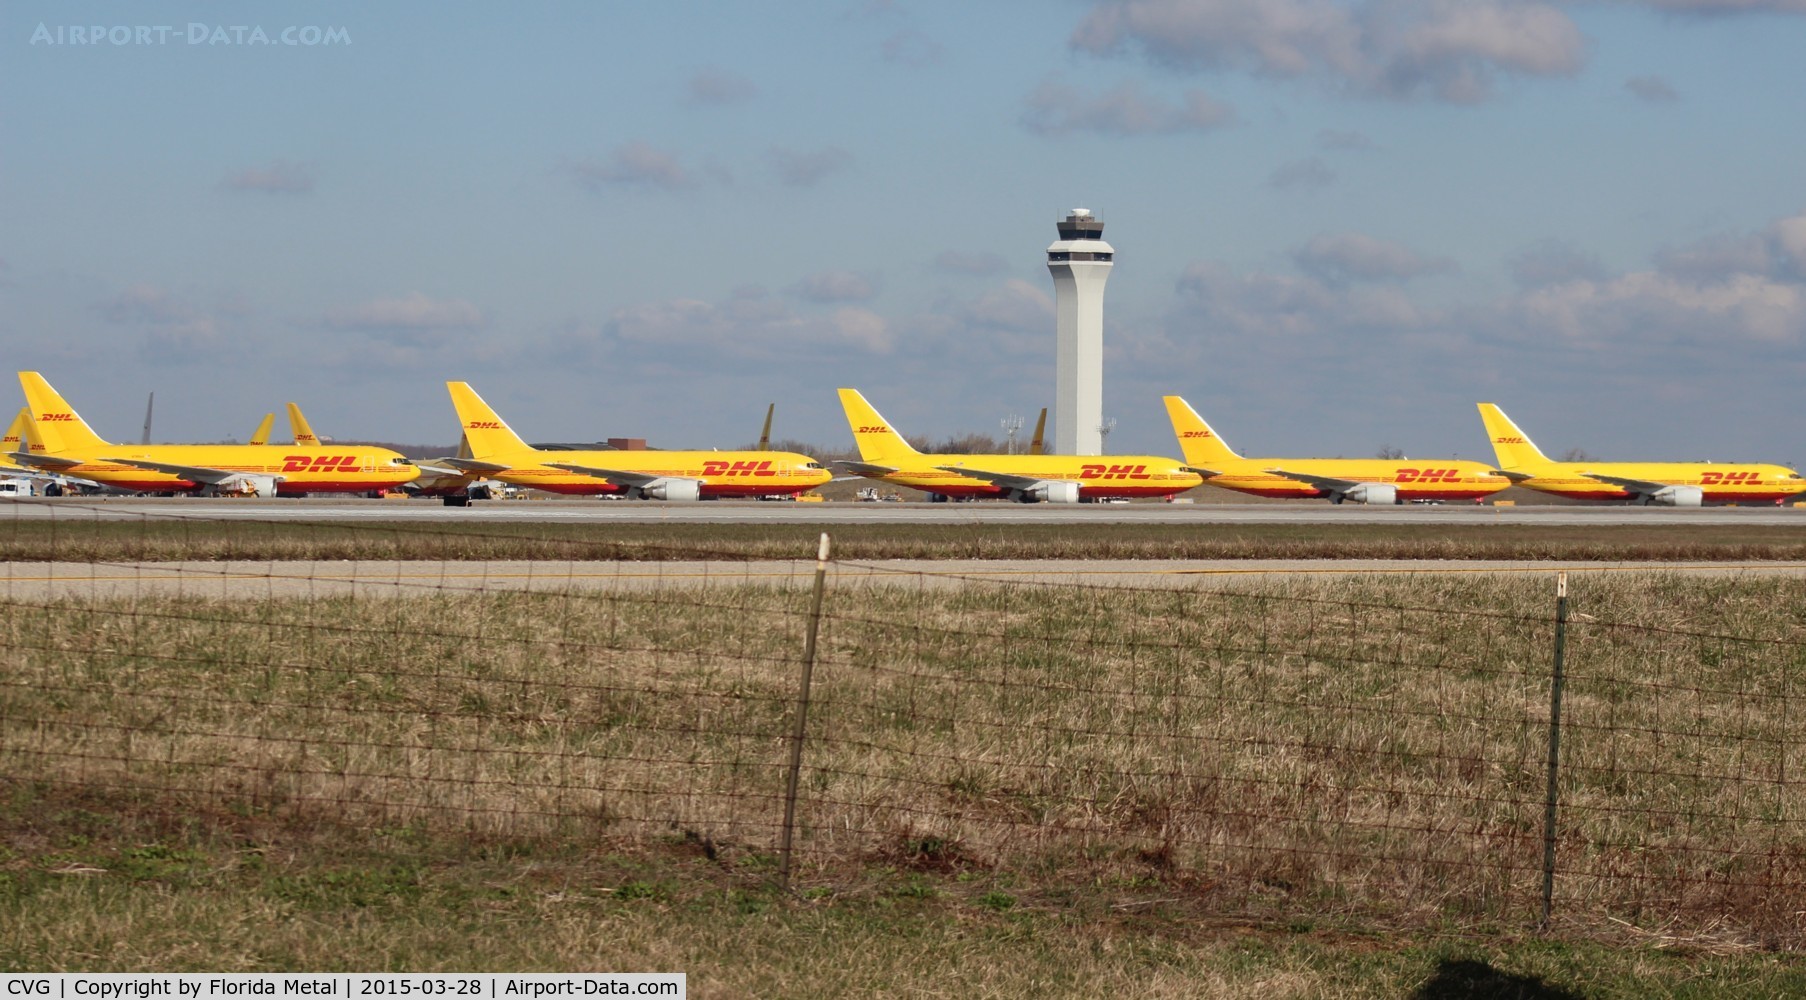 Cincinnati/northern Kentucky International Airport (CVG) - DHL line up